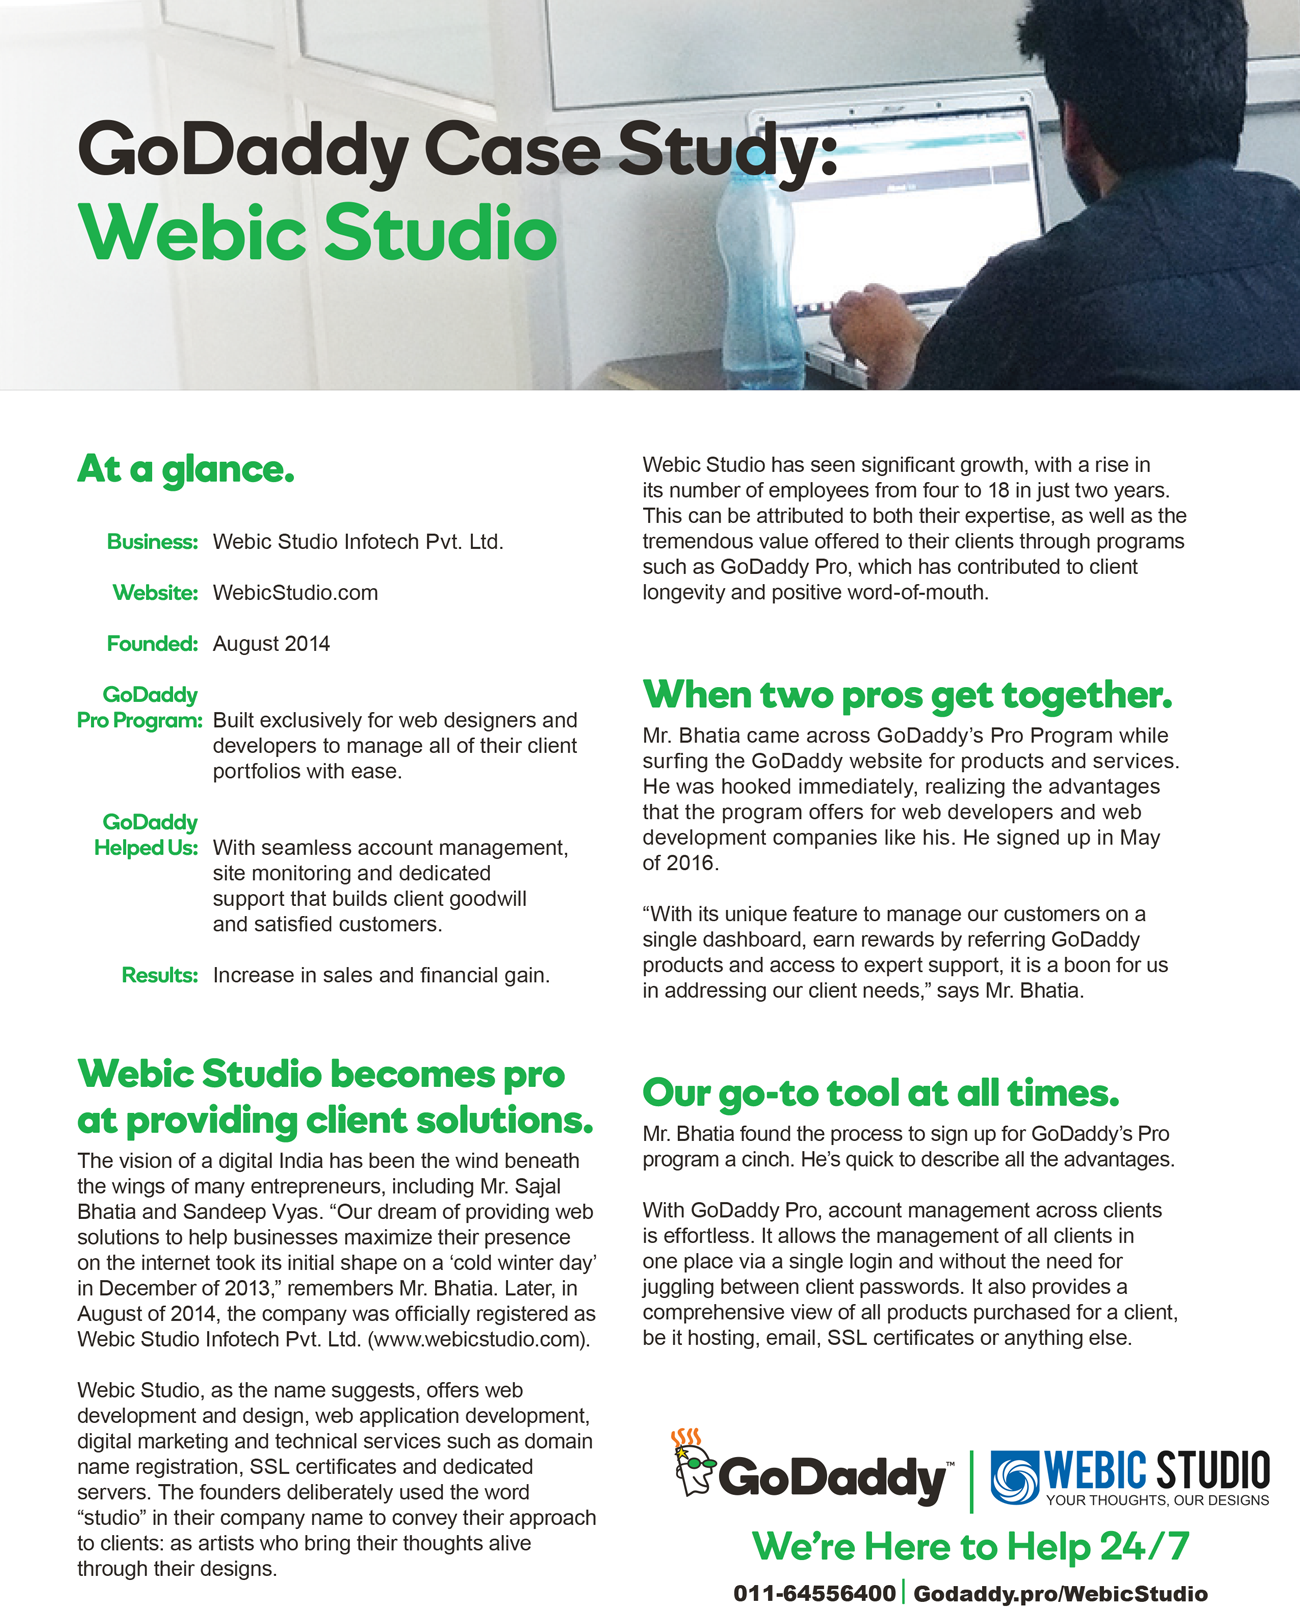 Godaddy Pro Case Study - Webic Studio